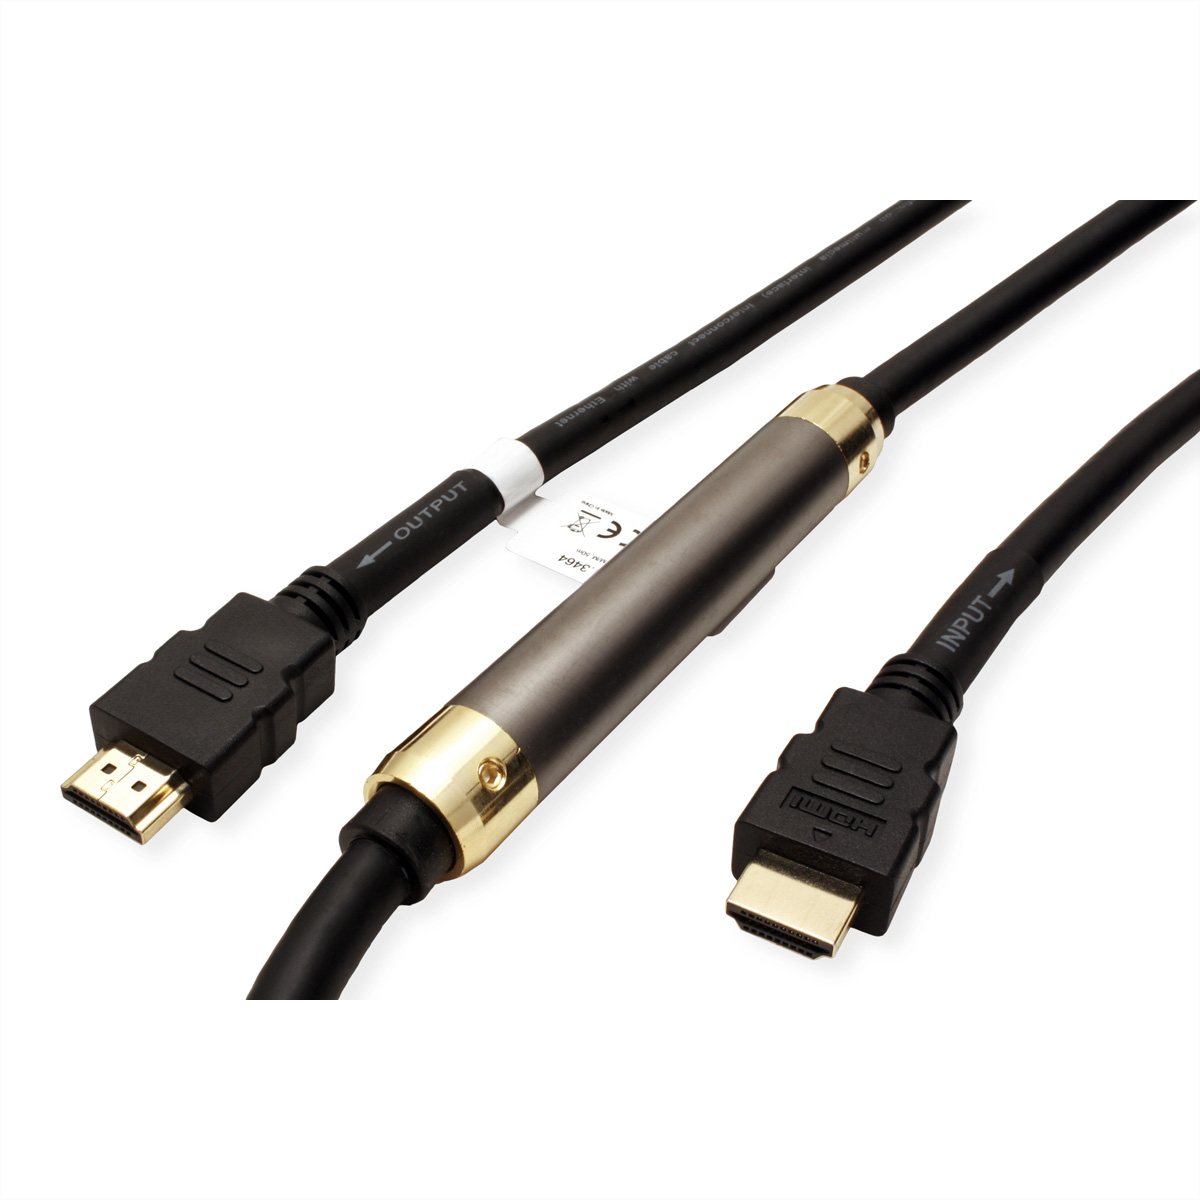 ROLINE Kabel mit HDMI Repeater mit HDMI High Kabel Speed Ethernet 4K